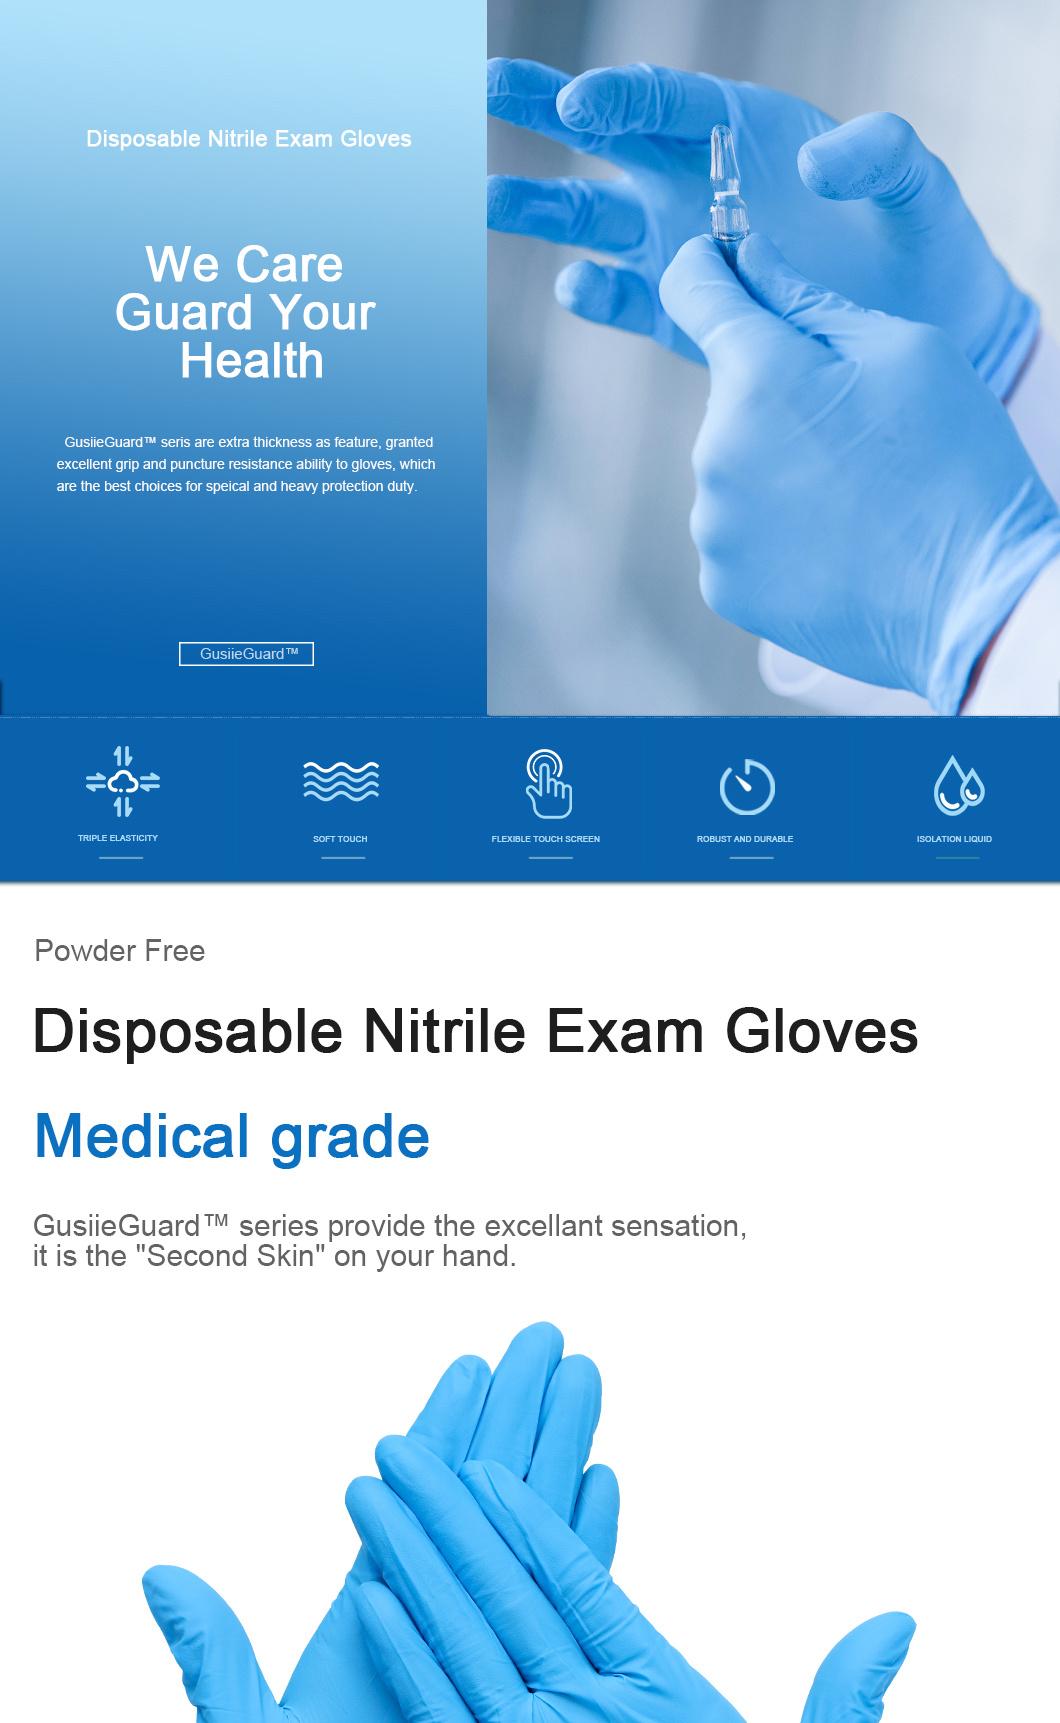 High Quality Disposable Medical Examination Blue Nitrile Gloves Blue Color Disposable Nitrile Large Gloves